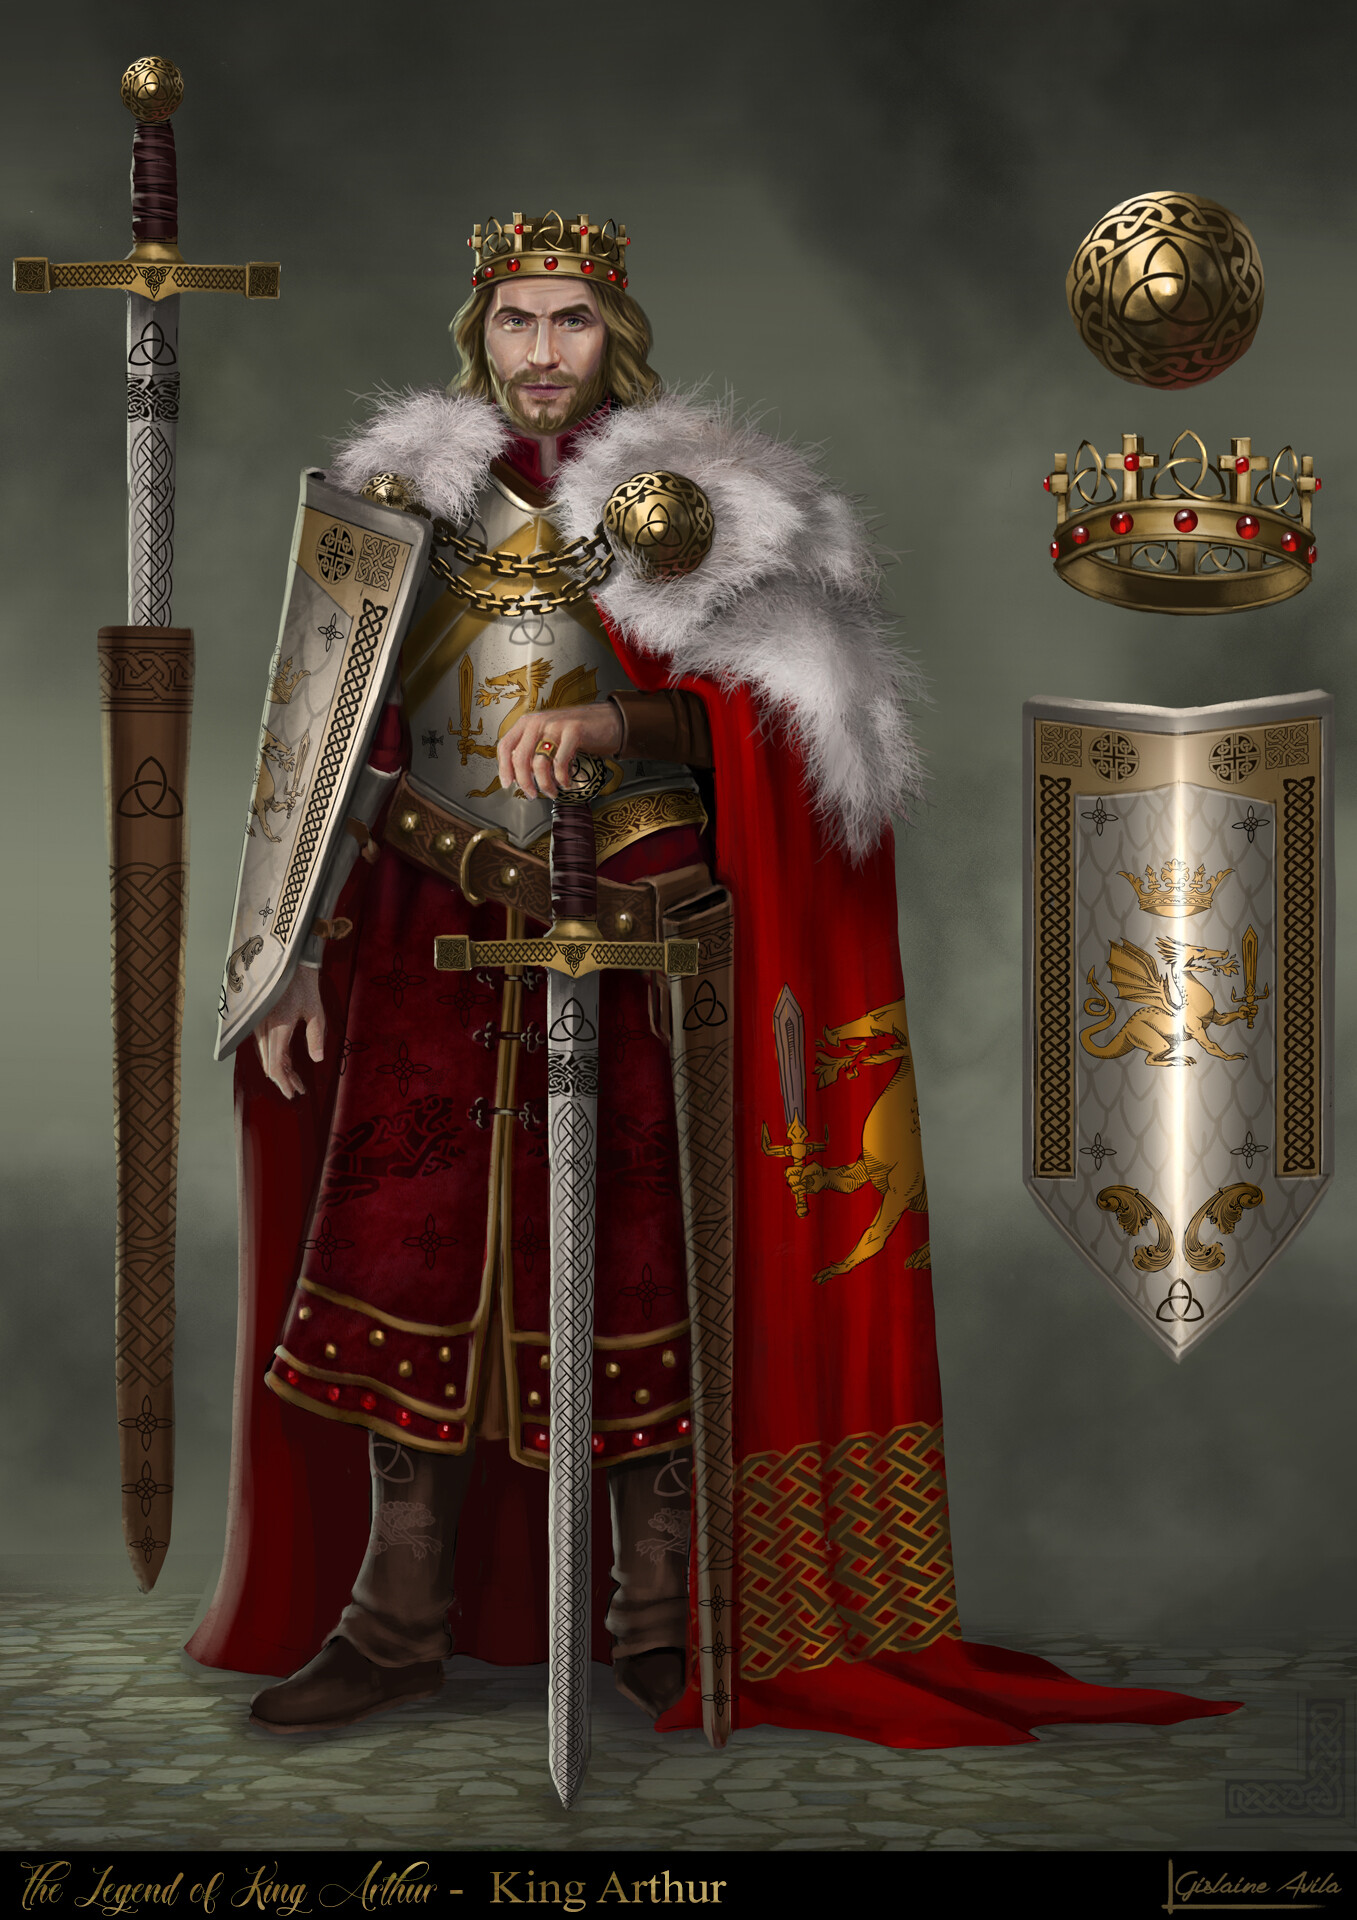 Legends of king arthur